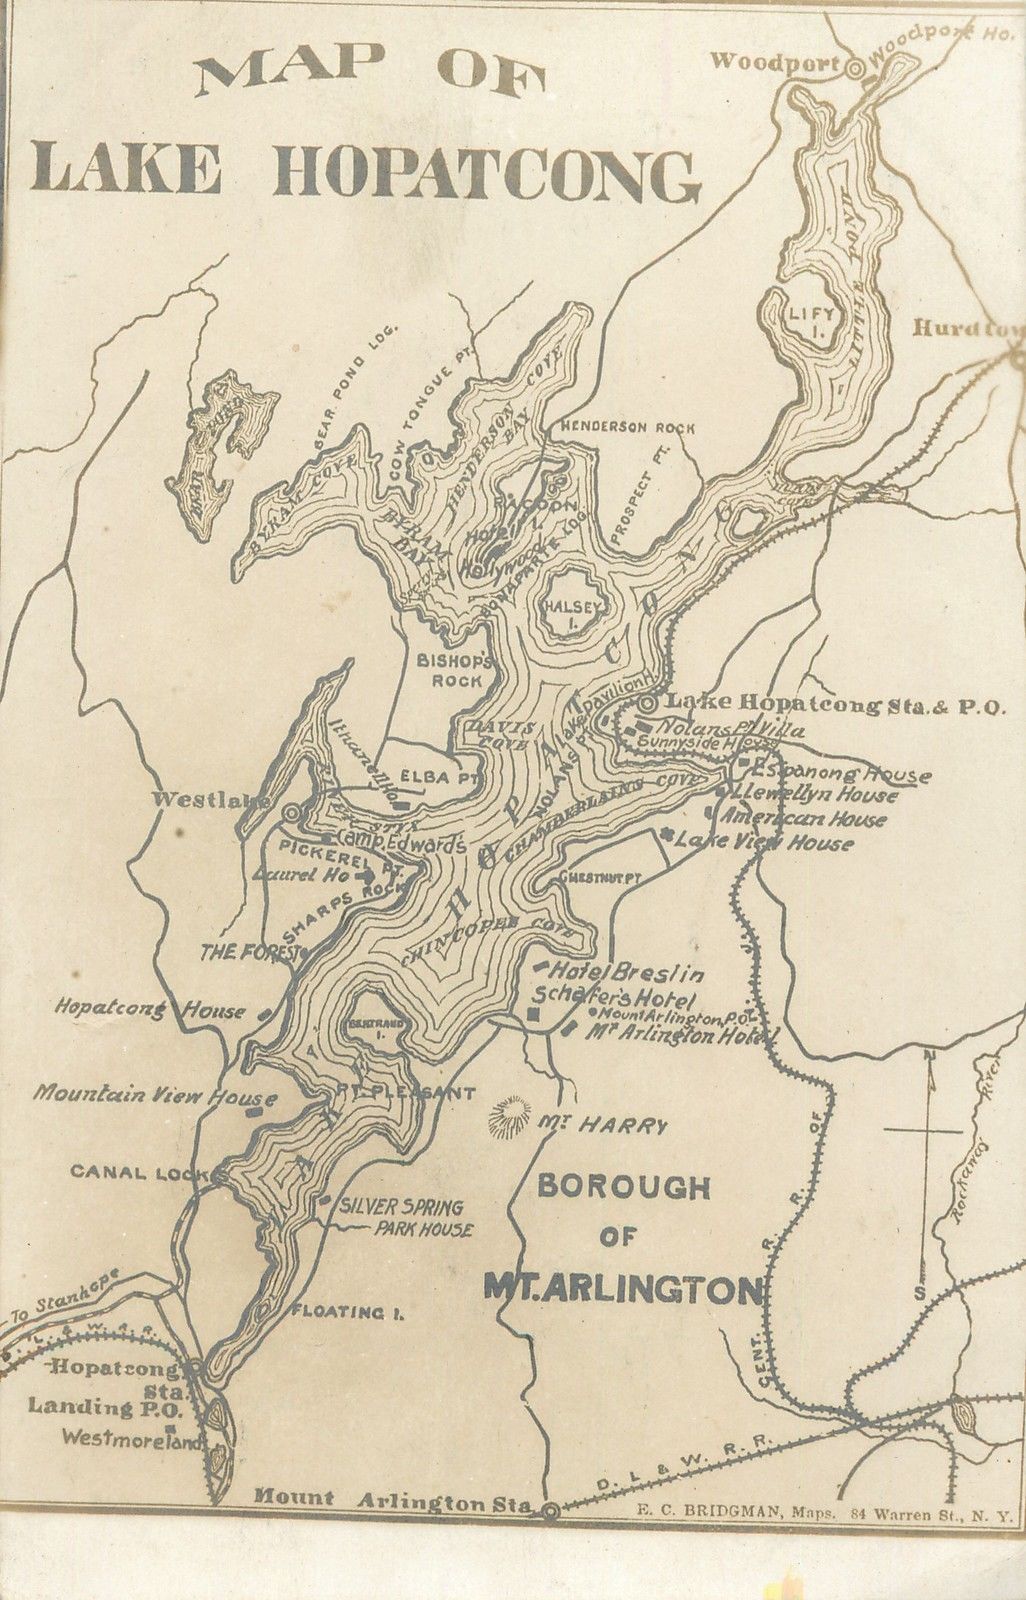 Lake Hopatcong - Map of the lake - W J Harris - c 1910